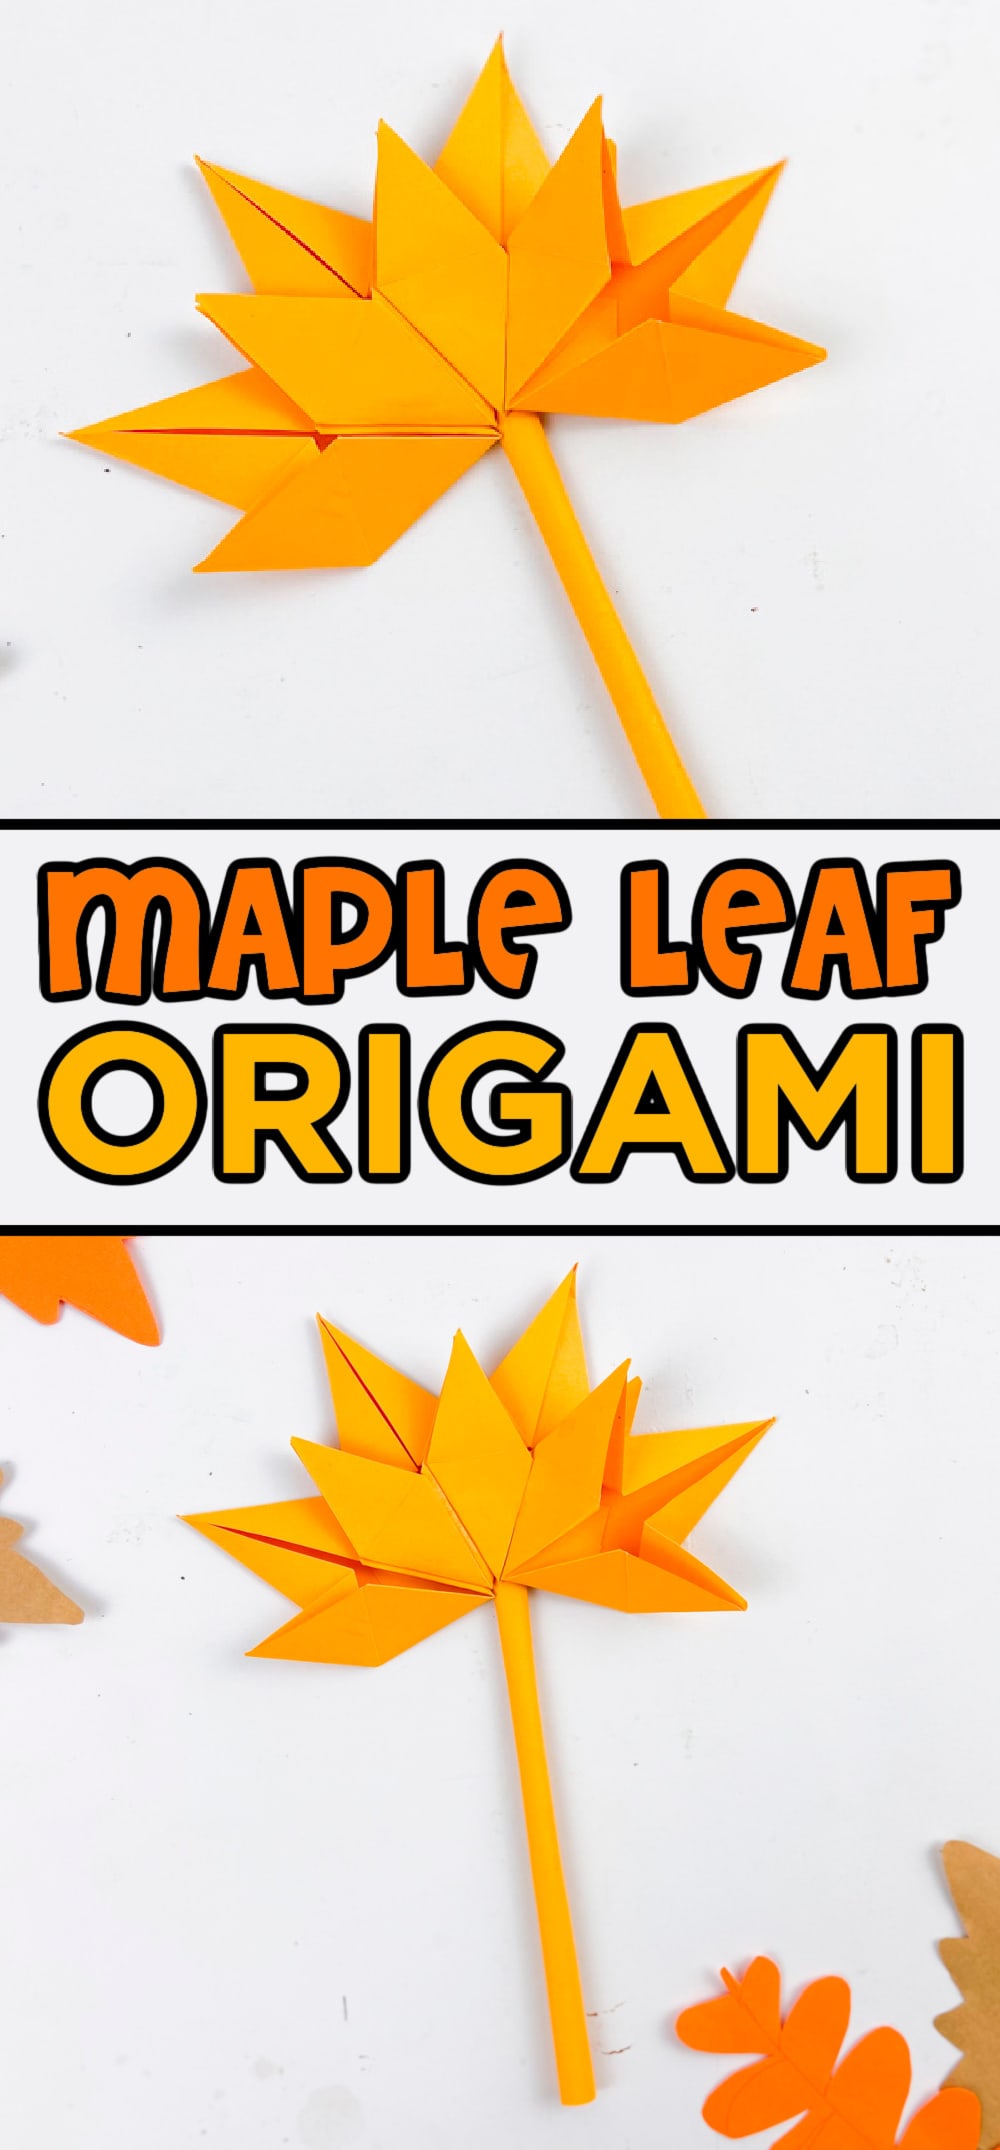 Japanese maple leaf origami